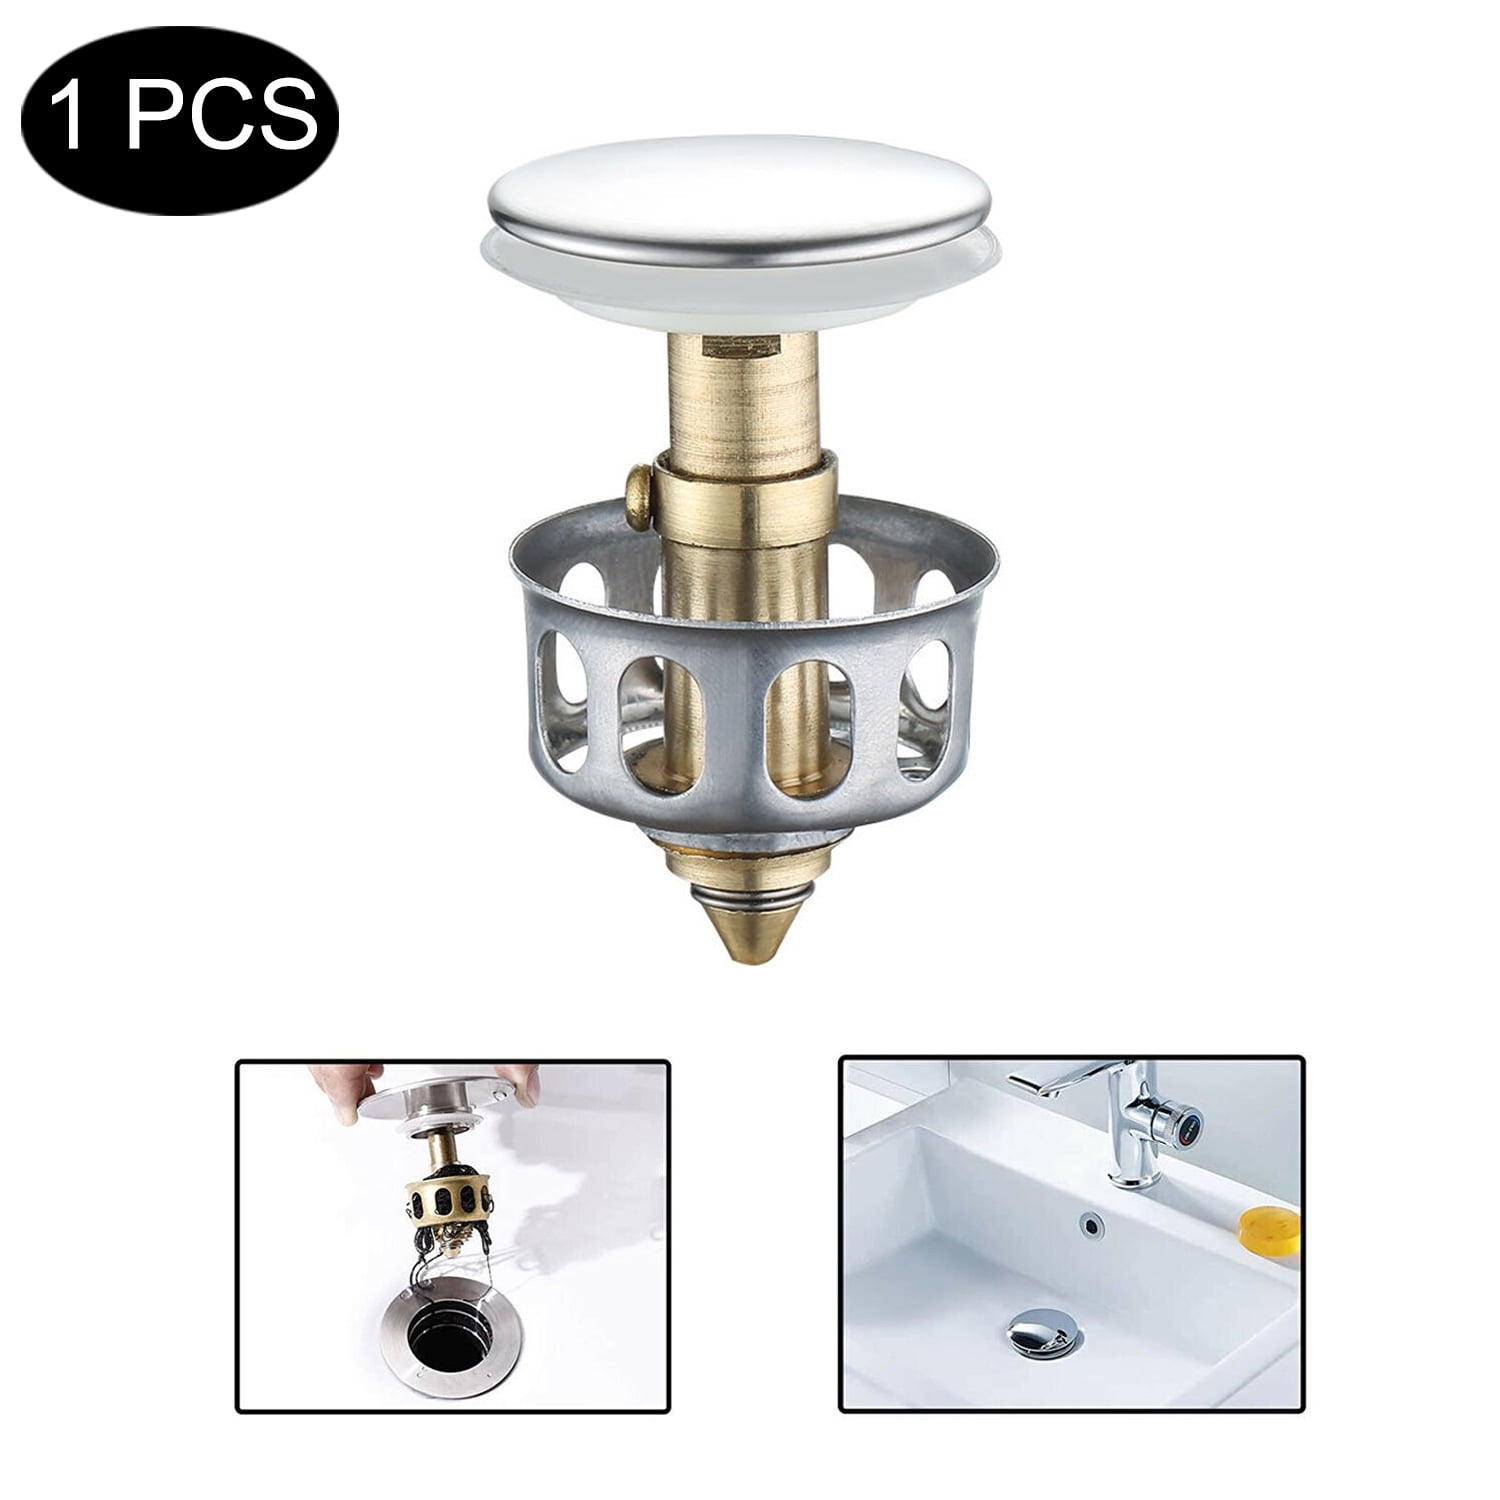 Details about   Universal wash basin bounce drain filter,Pop Up Bathroom Sink Drain Plug 